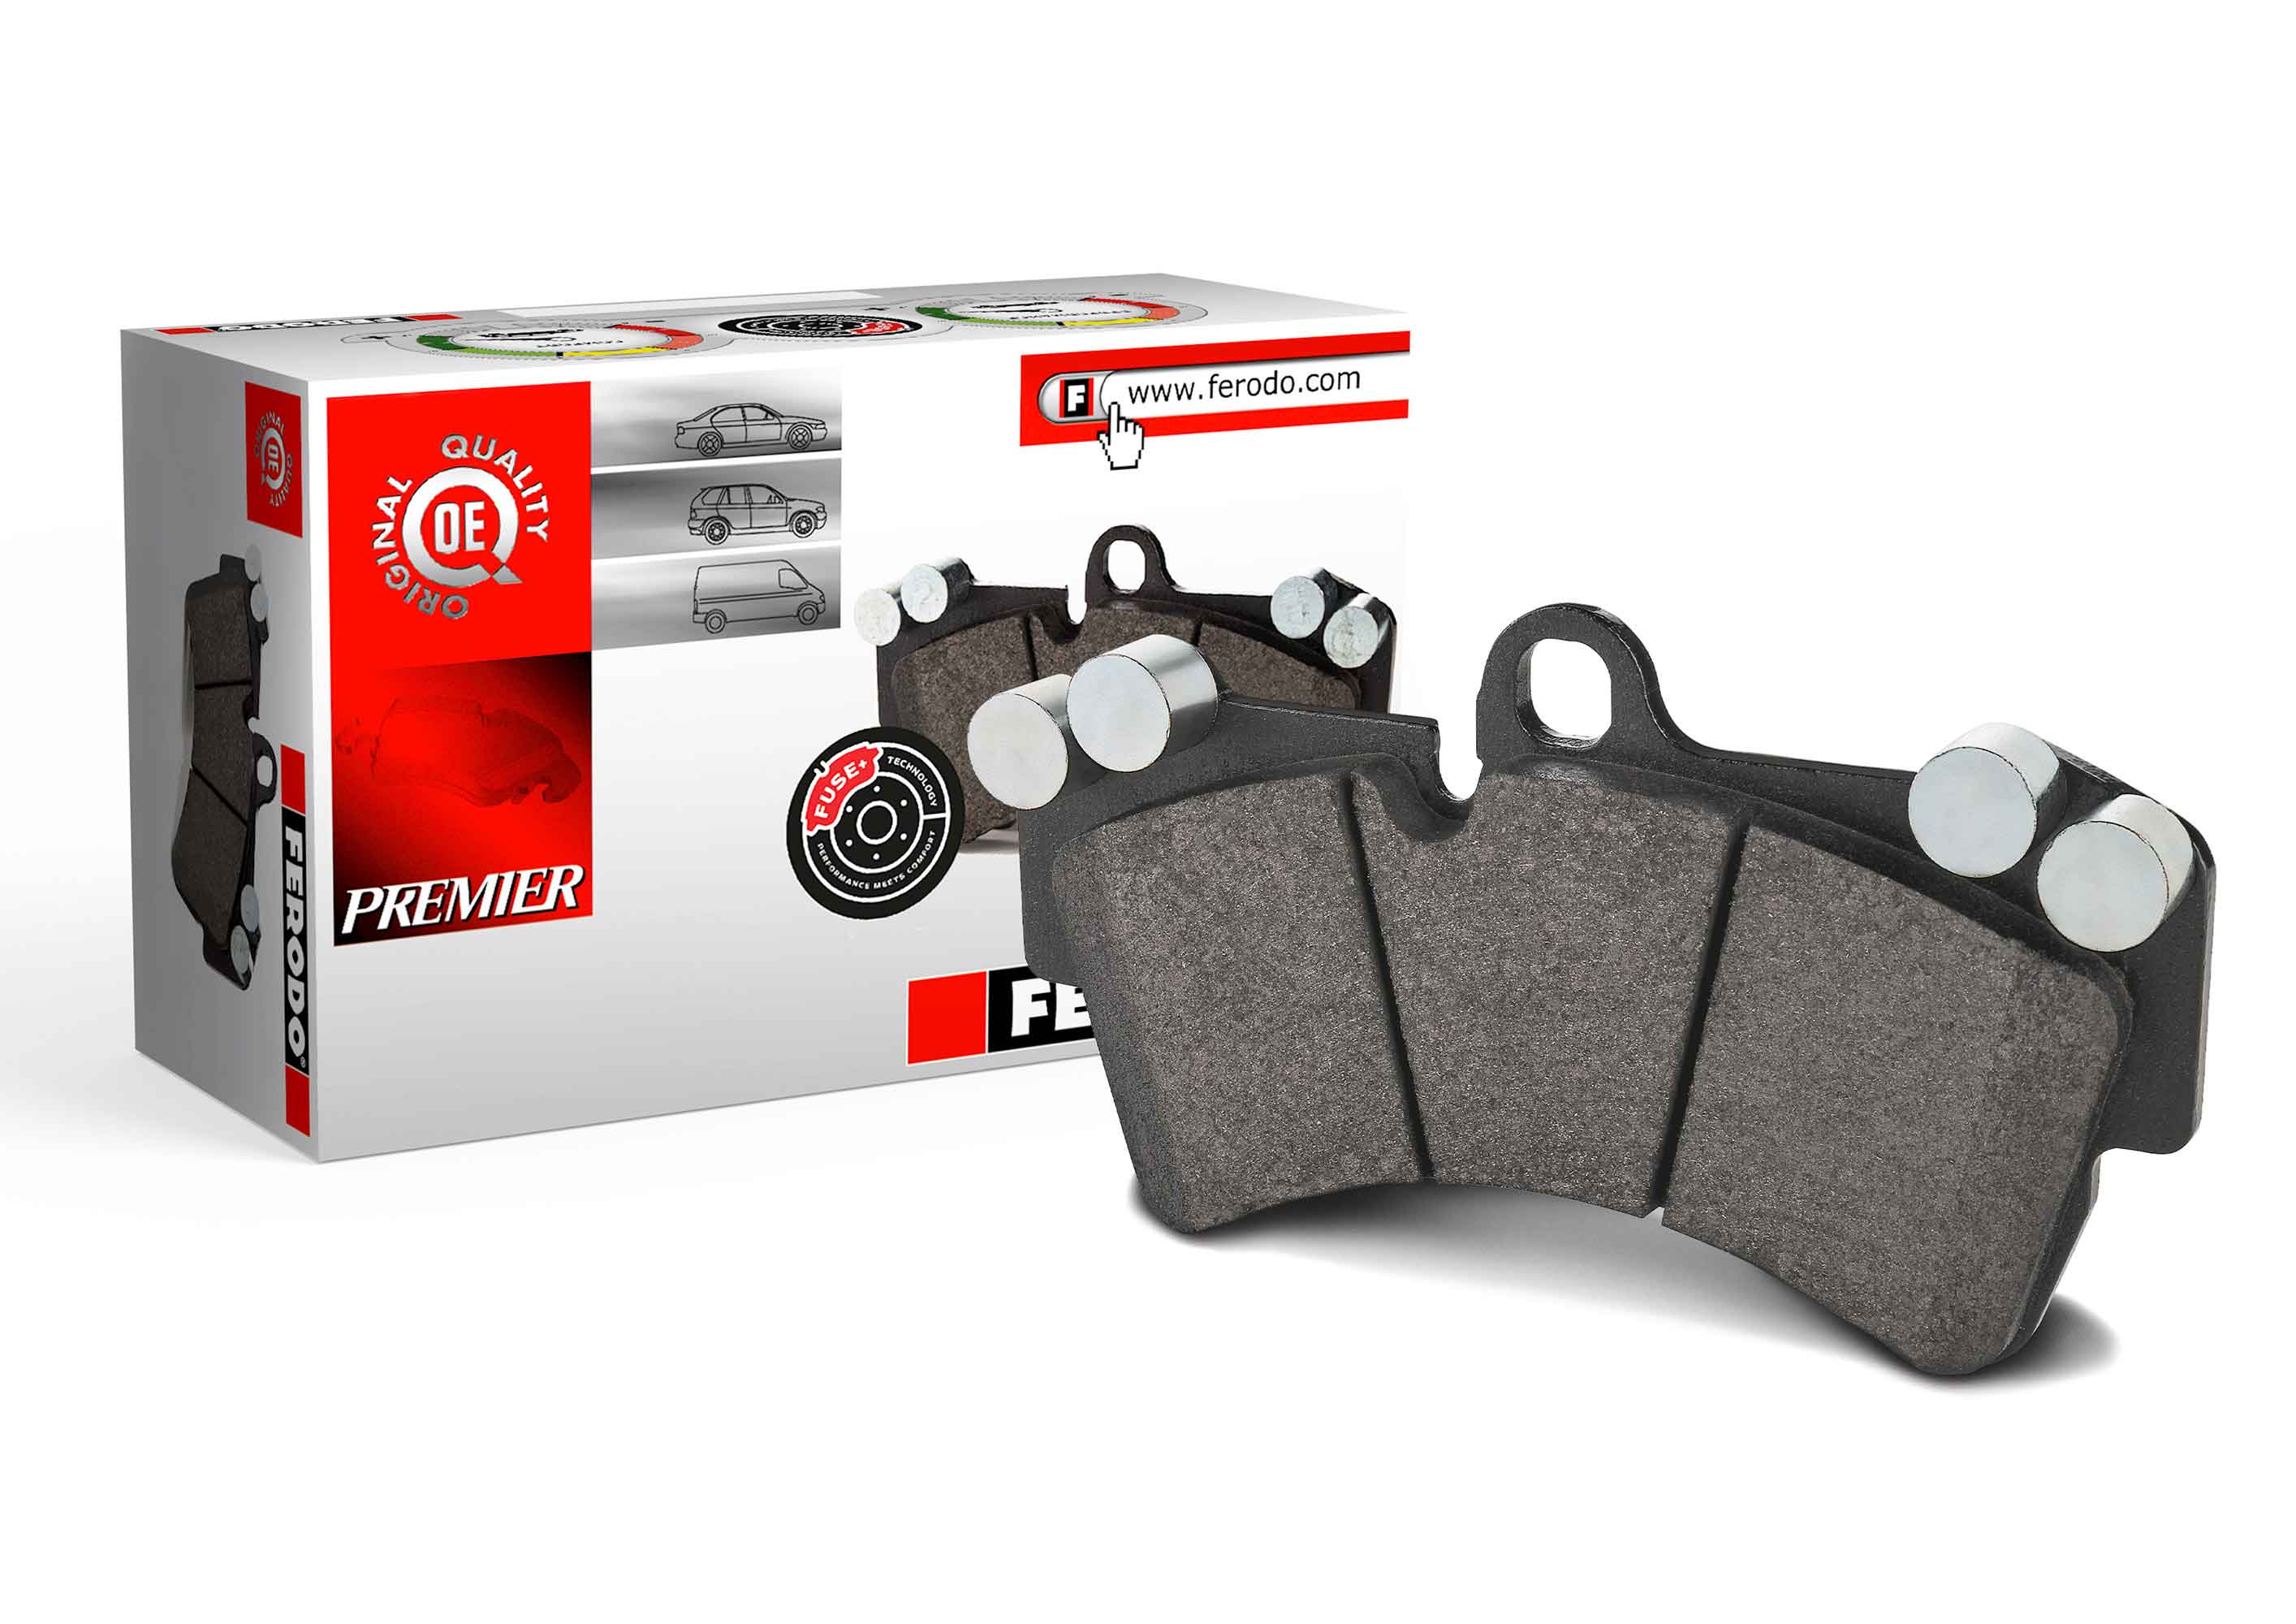 FERODO ®  Introduces First Automotive Brake Pads to Bridge Gap Between Braking Performance and Comfort